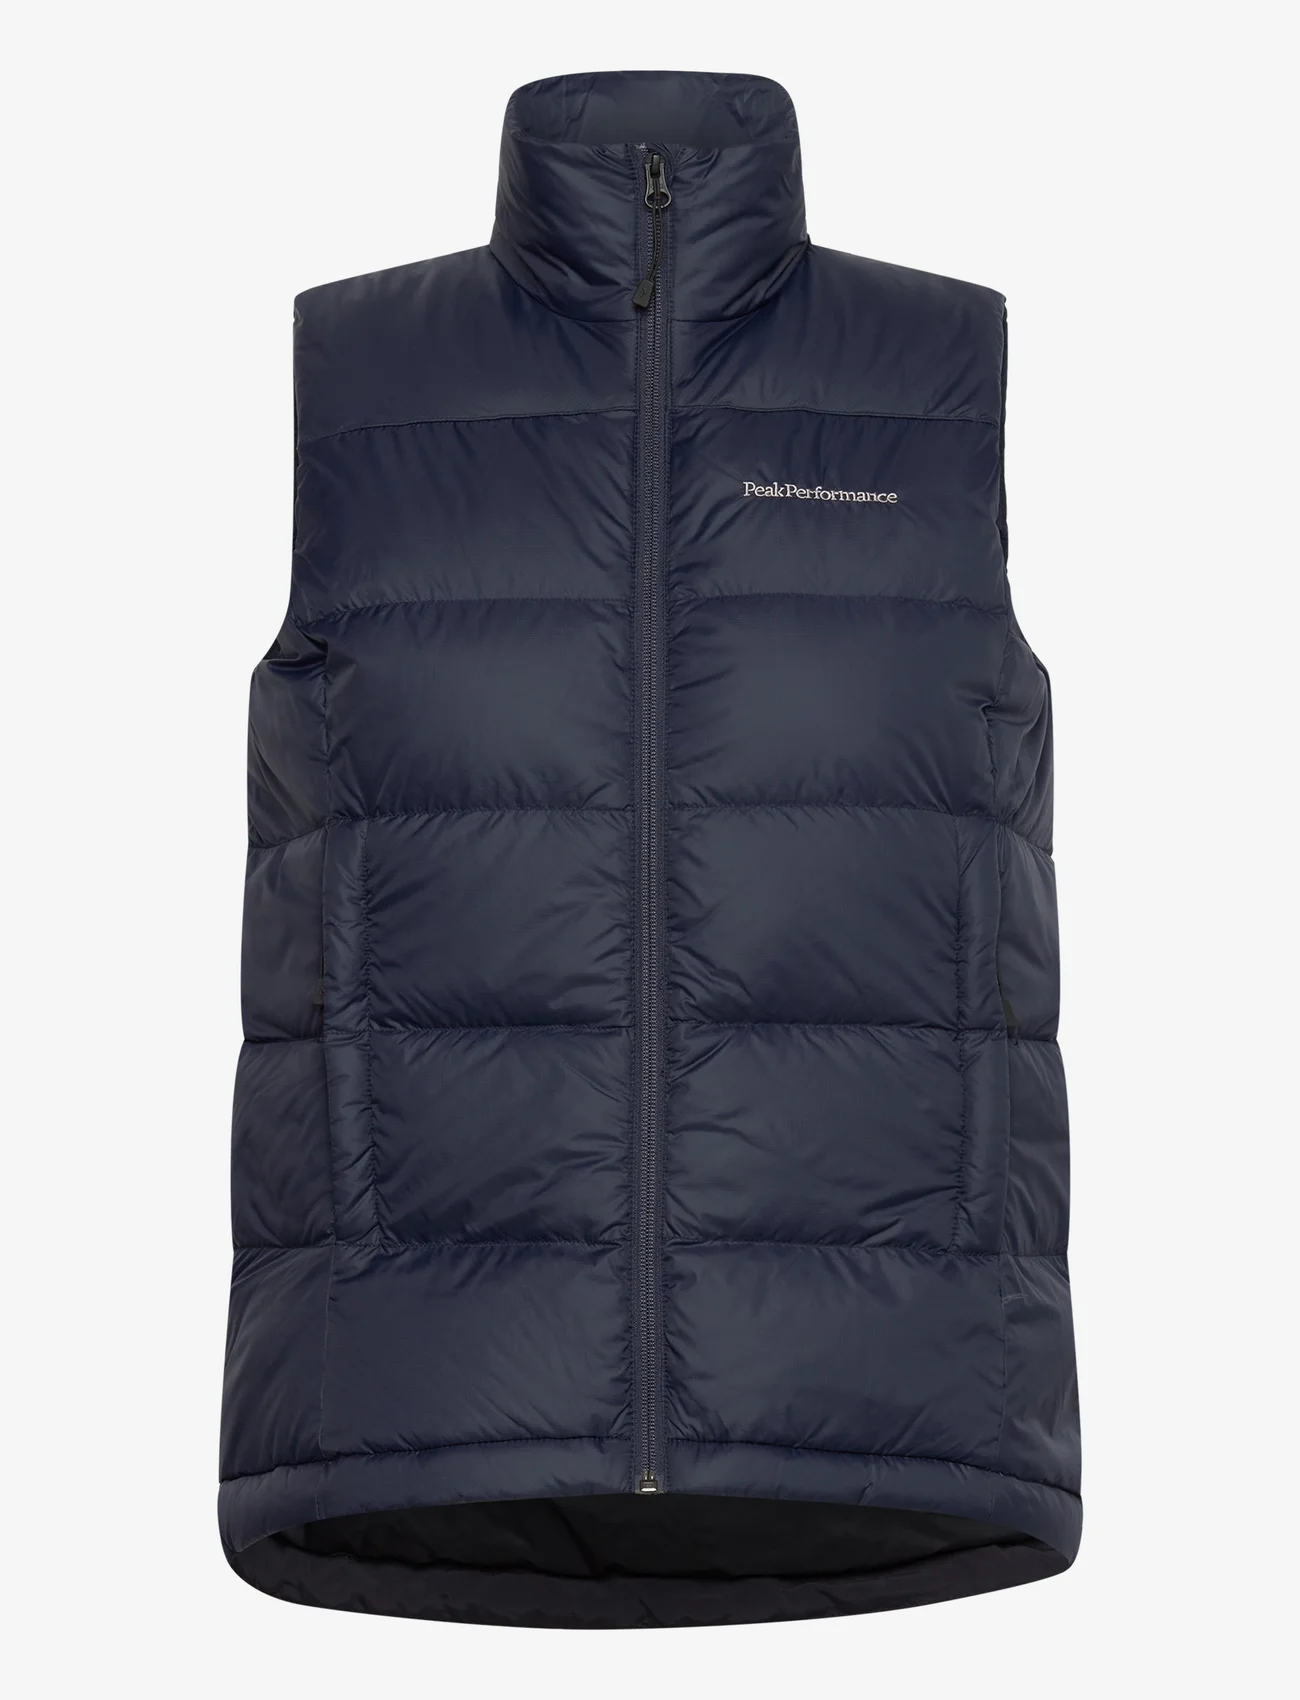 Peak Performance - W Frost Explorer Vest-BLUE SHADOW - puffer vests - blue shadow - 0